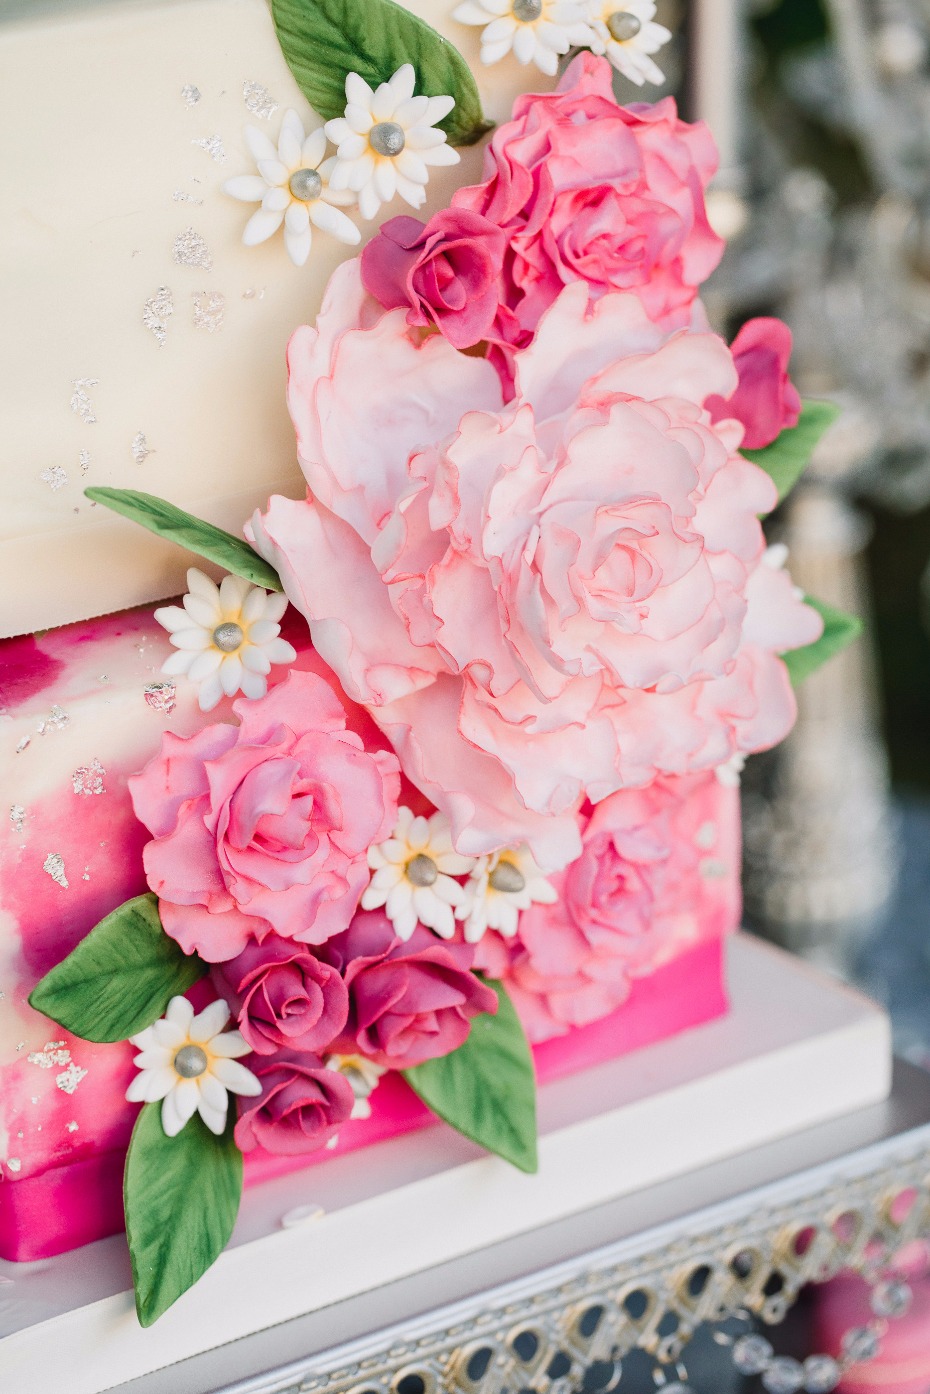 gorgeous handmade sugar flowers #weddingcake #sugarflowers #cakestand